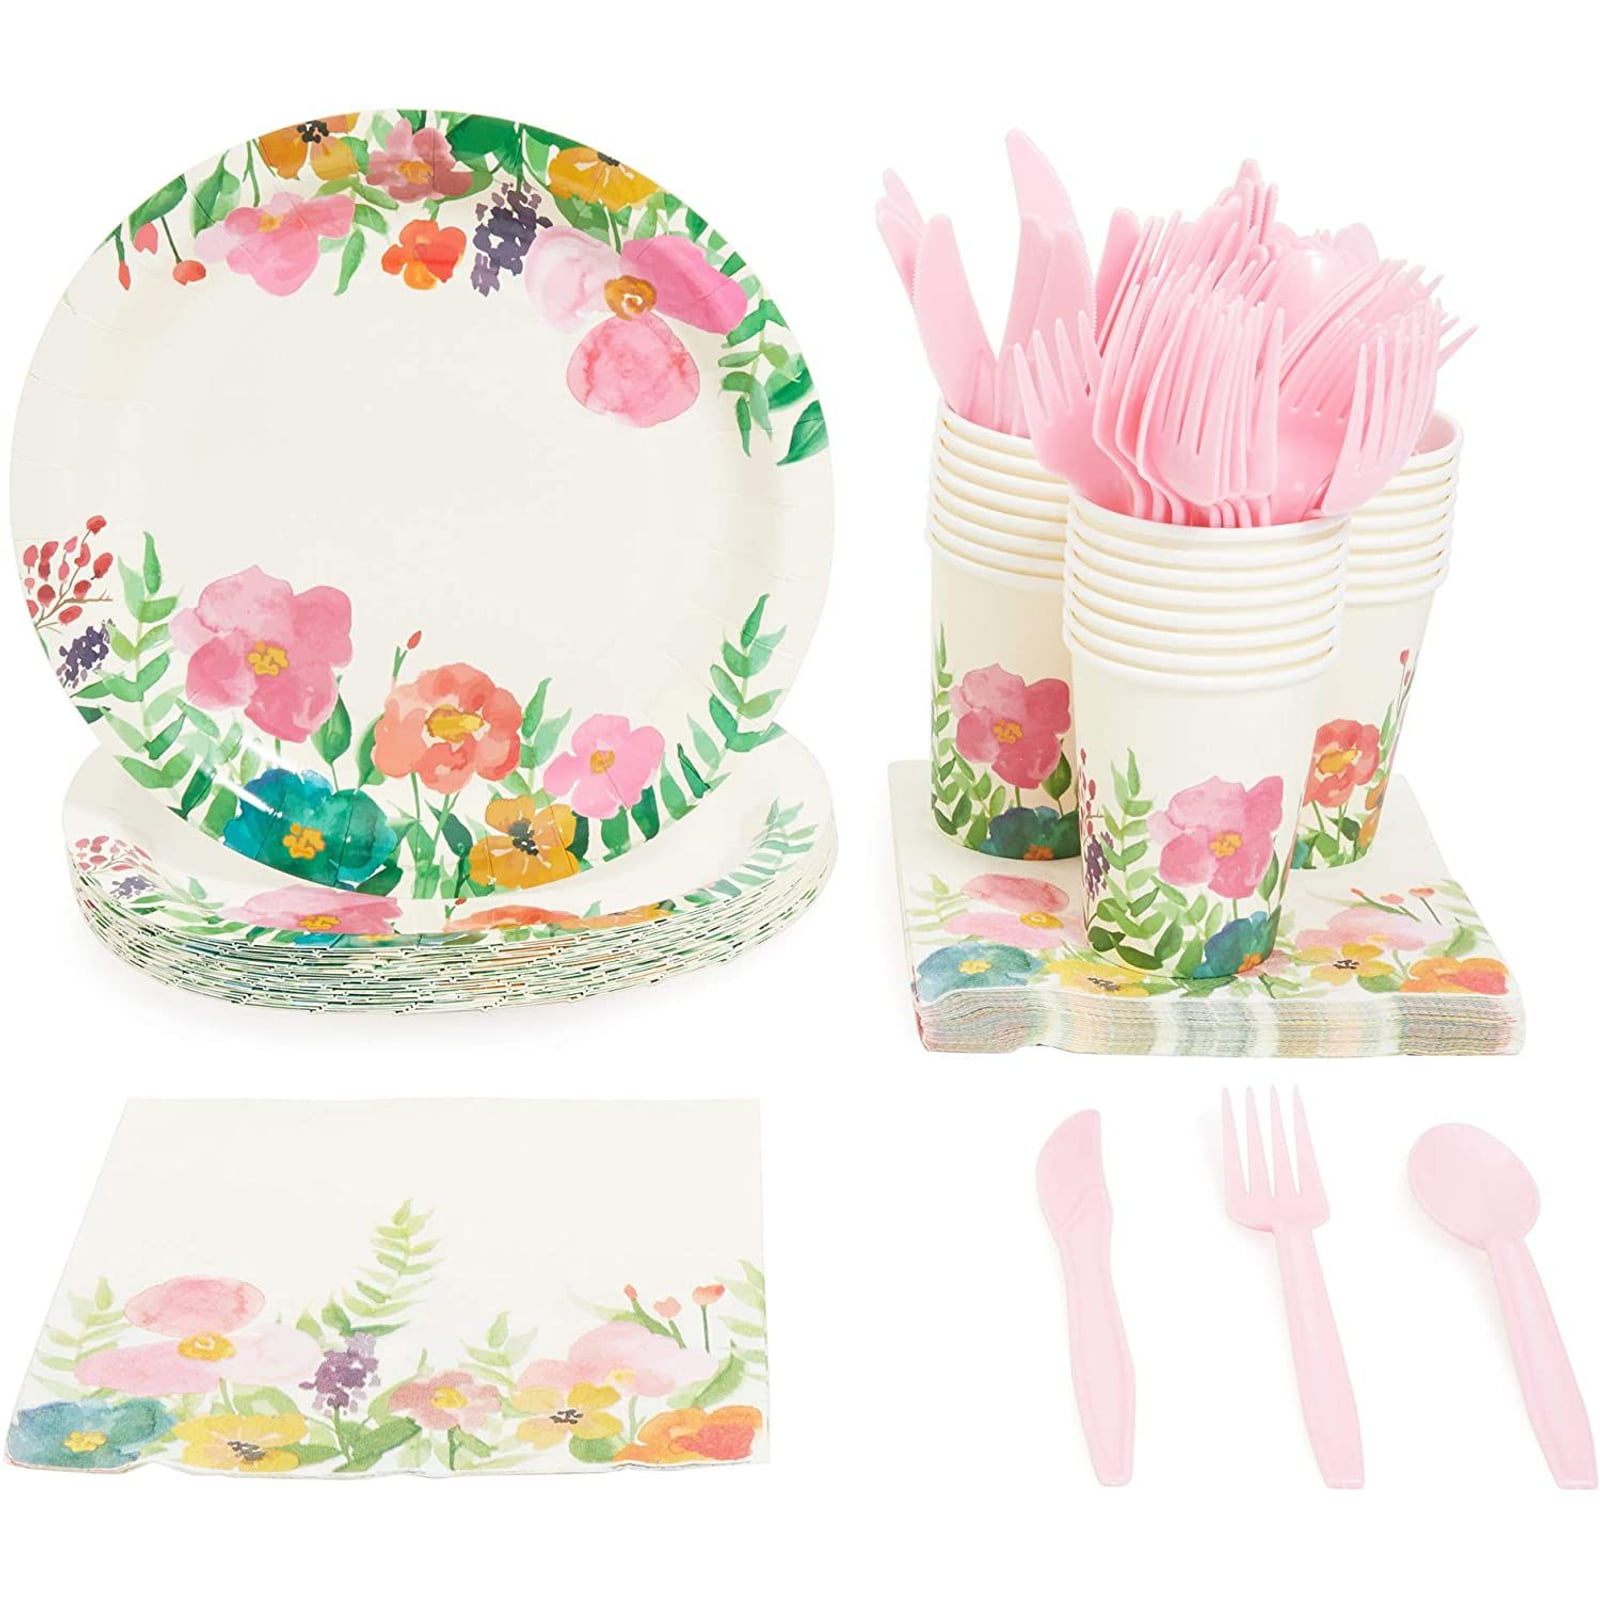 8 Flower Paper Plates Baby Shower Plates Garden Tea Party Tableware Birthday Plates Bridal Shower Floral Party Plates Flower Plates